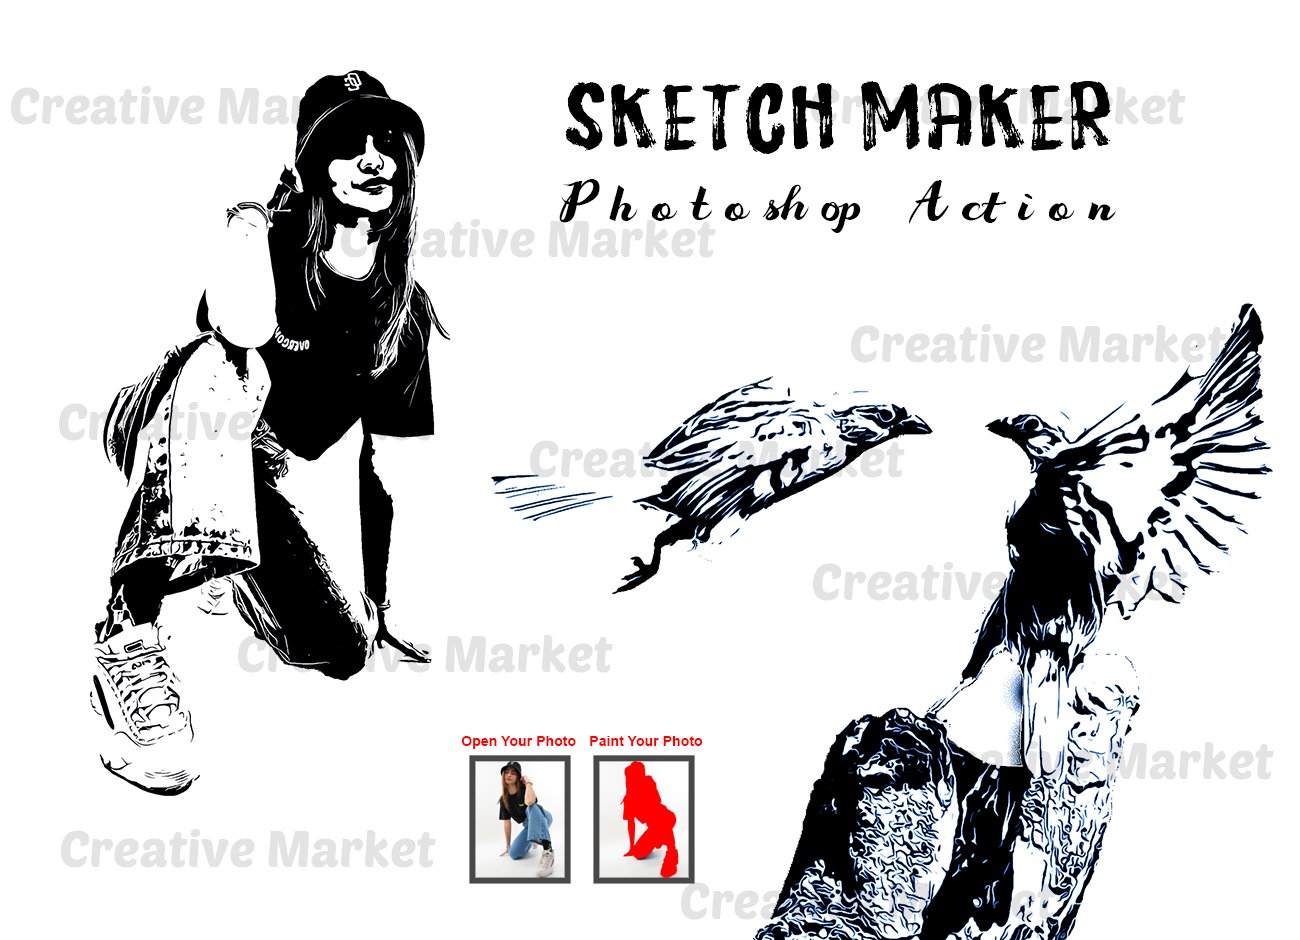 Sketch Maker Photoshop Actioncover image.